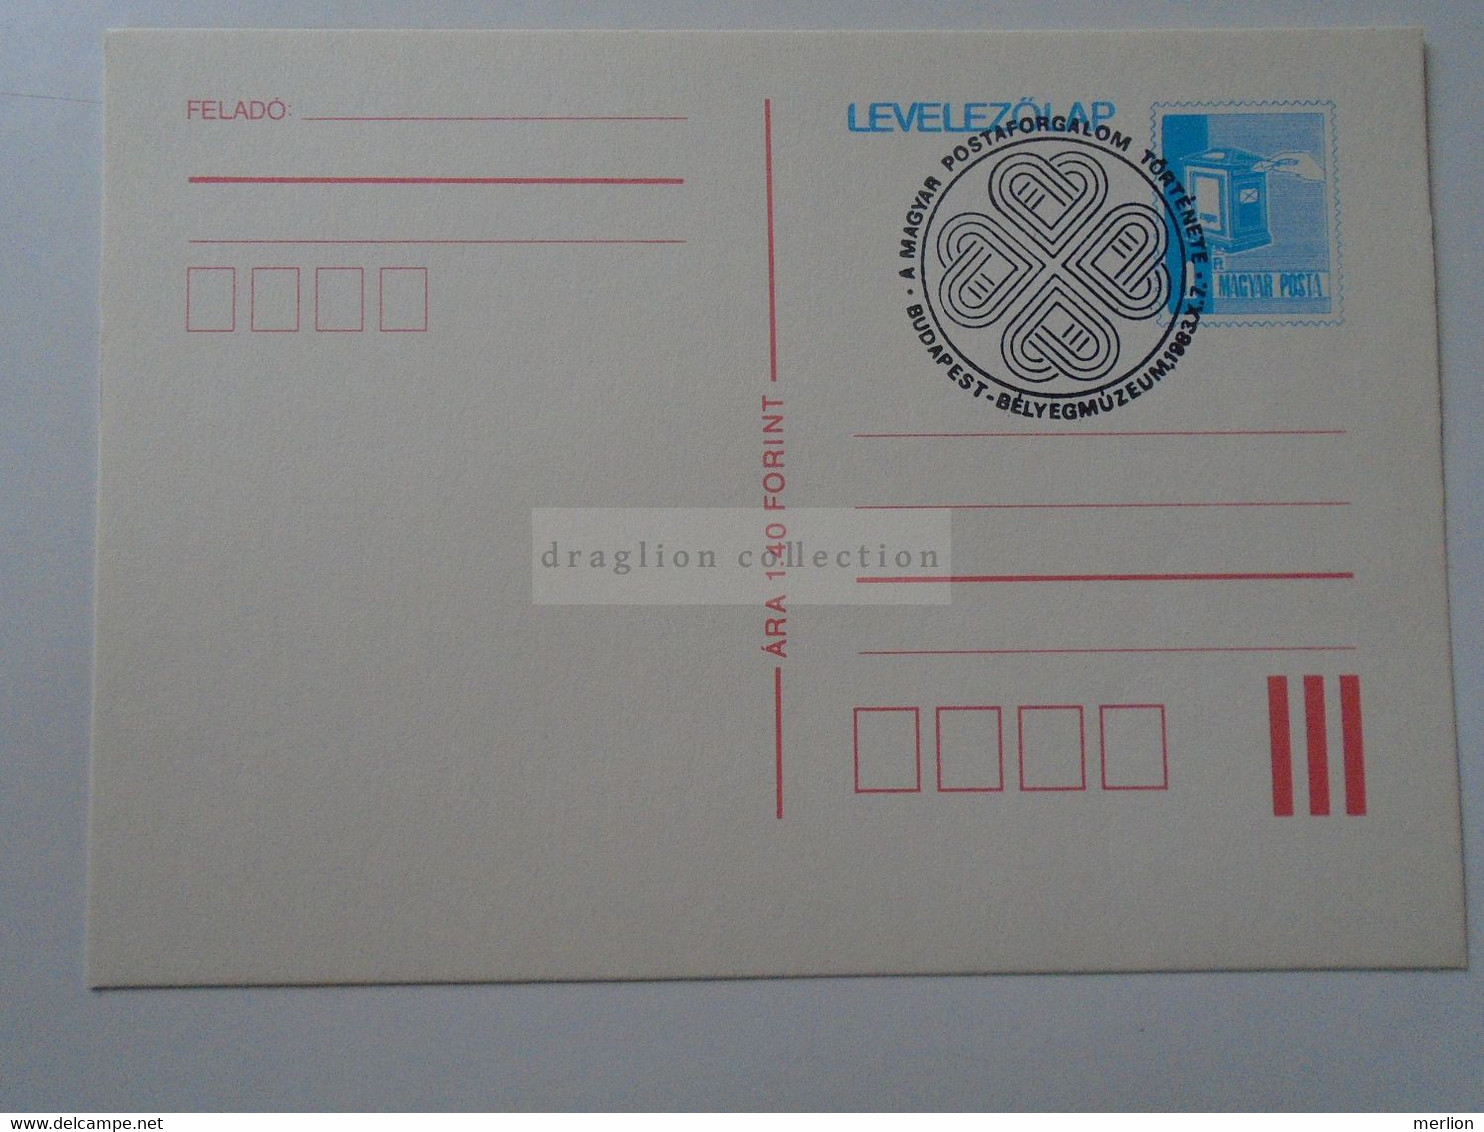 D187099  HUNGARY- Stationery - Postmark  MAGYAR POSTA   - Hungarian Post - Bélyegmúzeum - Postatörténet  1983 BP - Postmark Collection